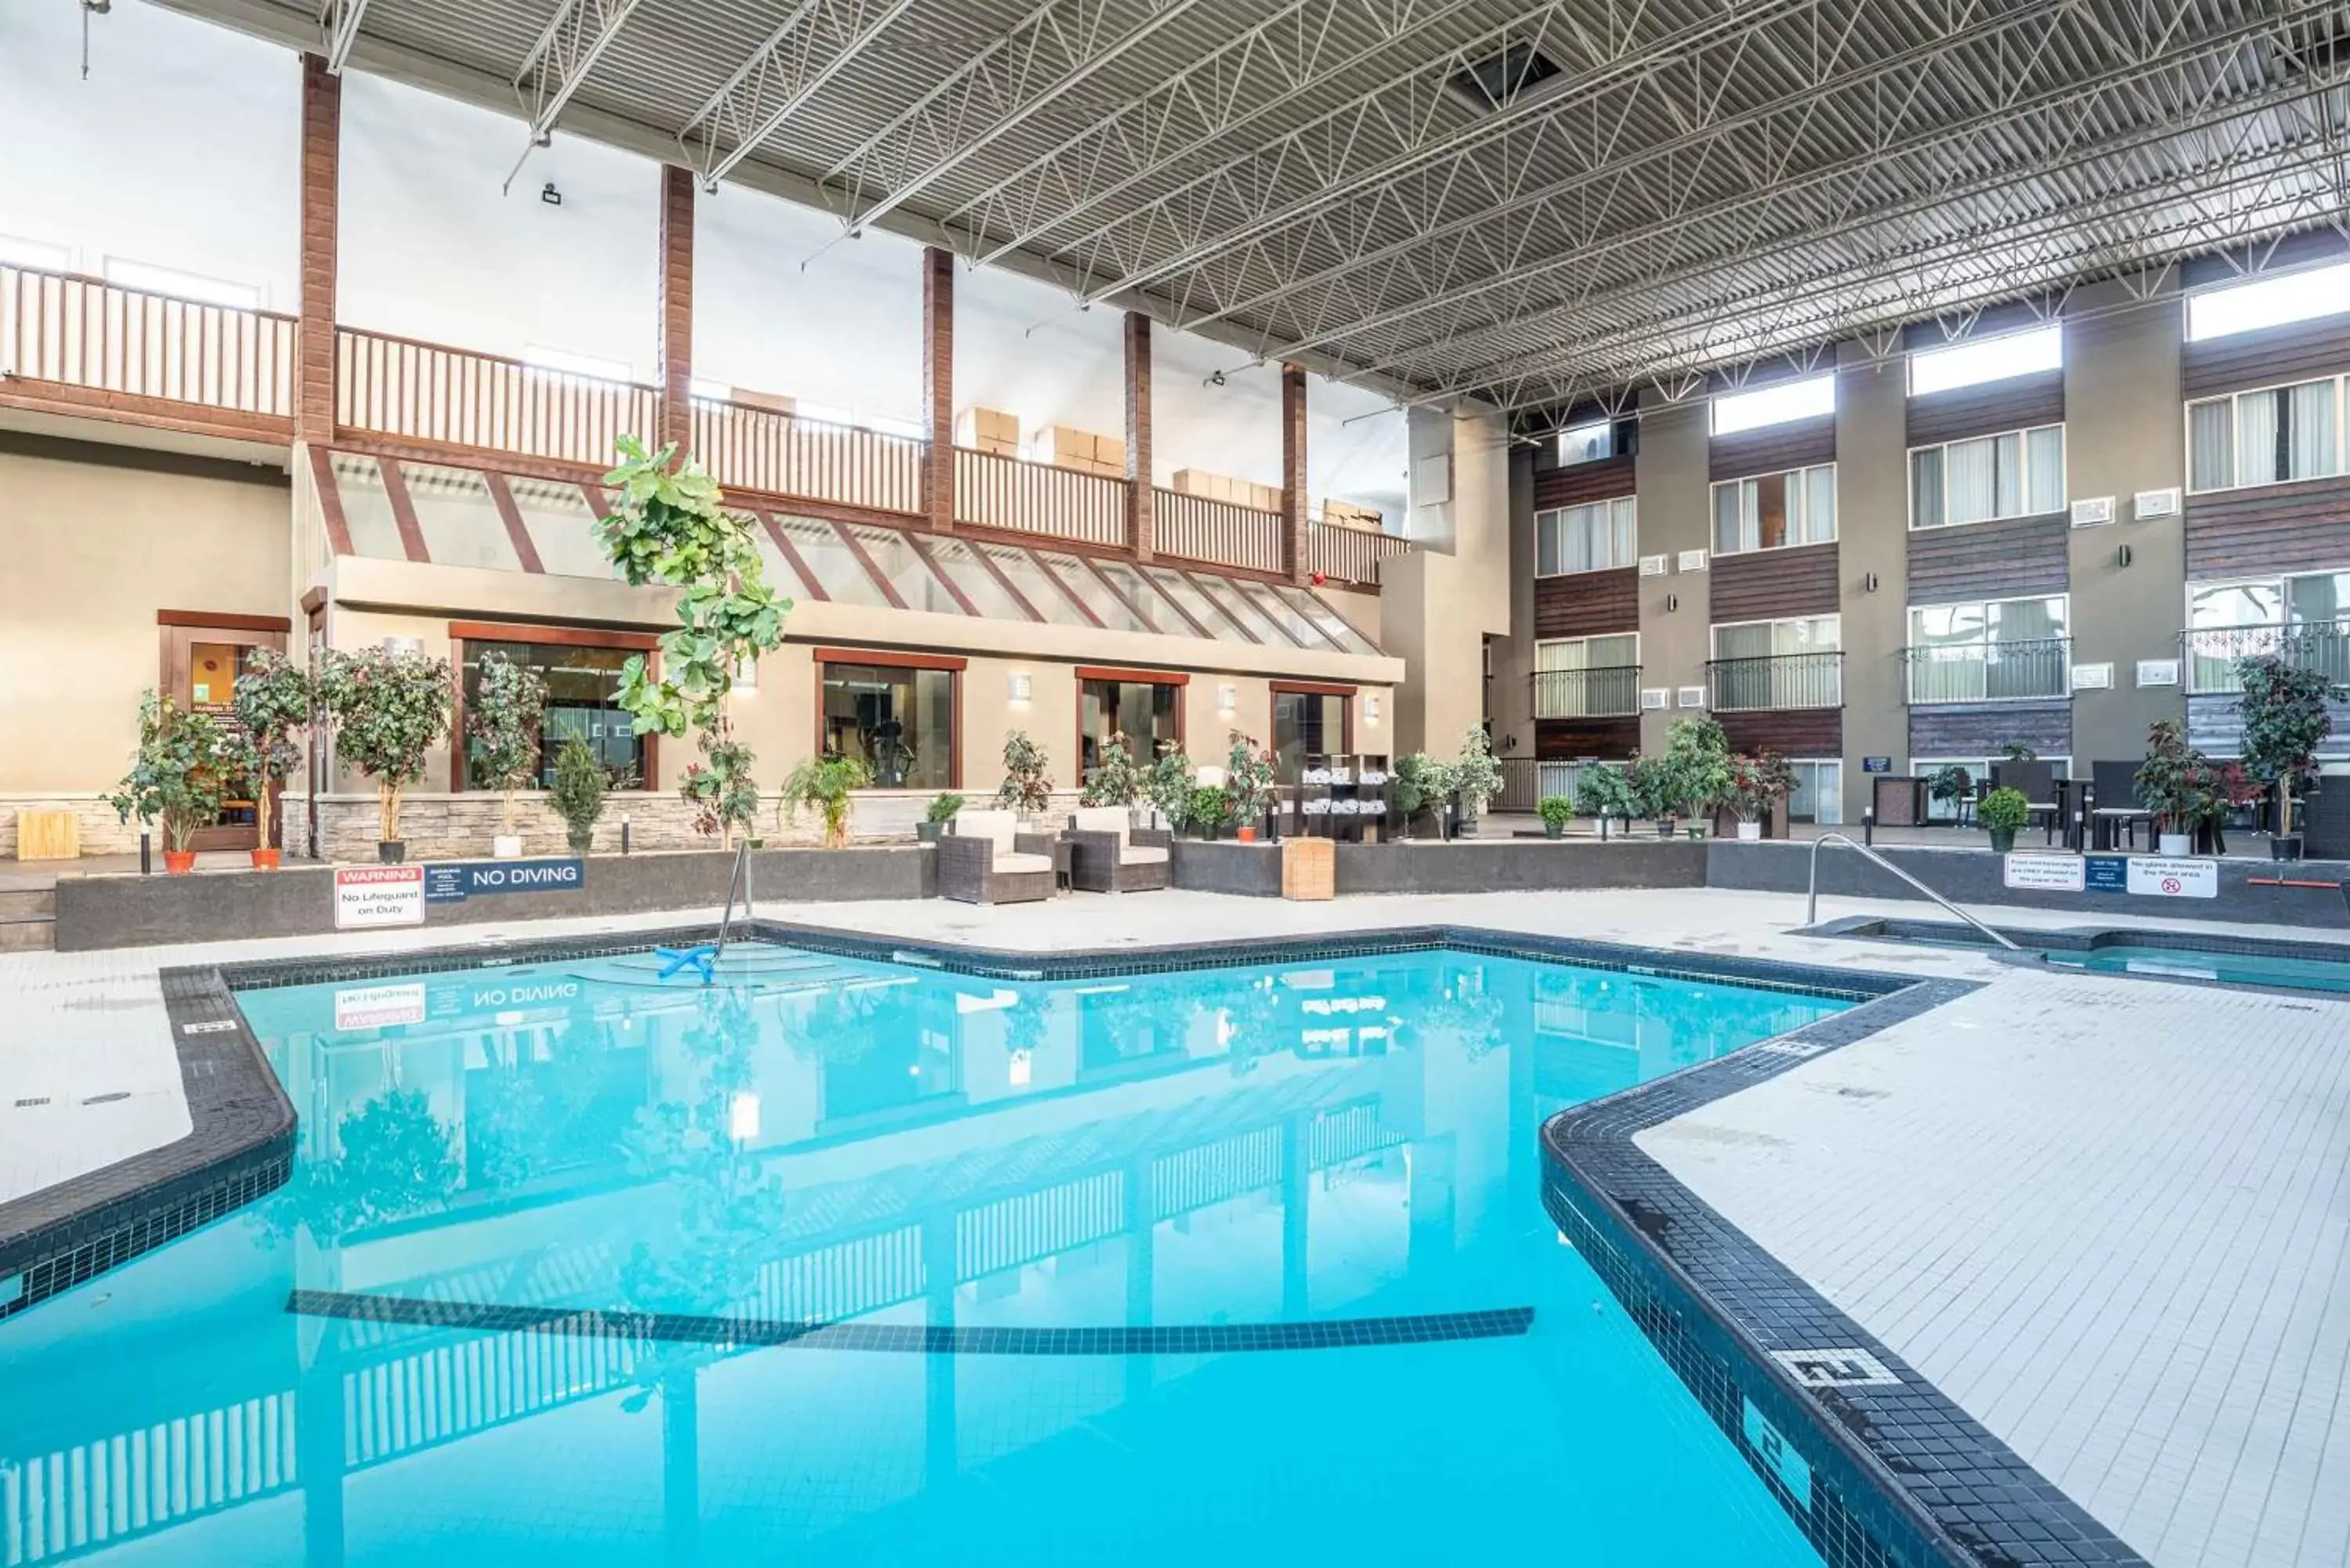 Swimming pool in Sandman Hotel Edmonton West